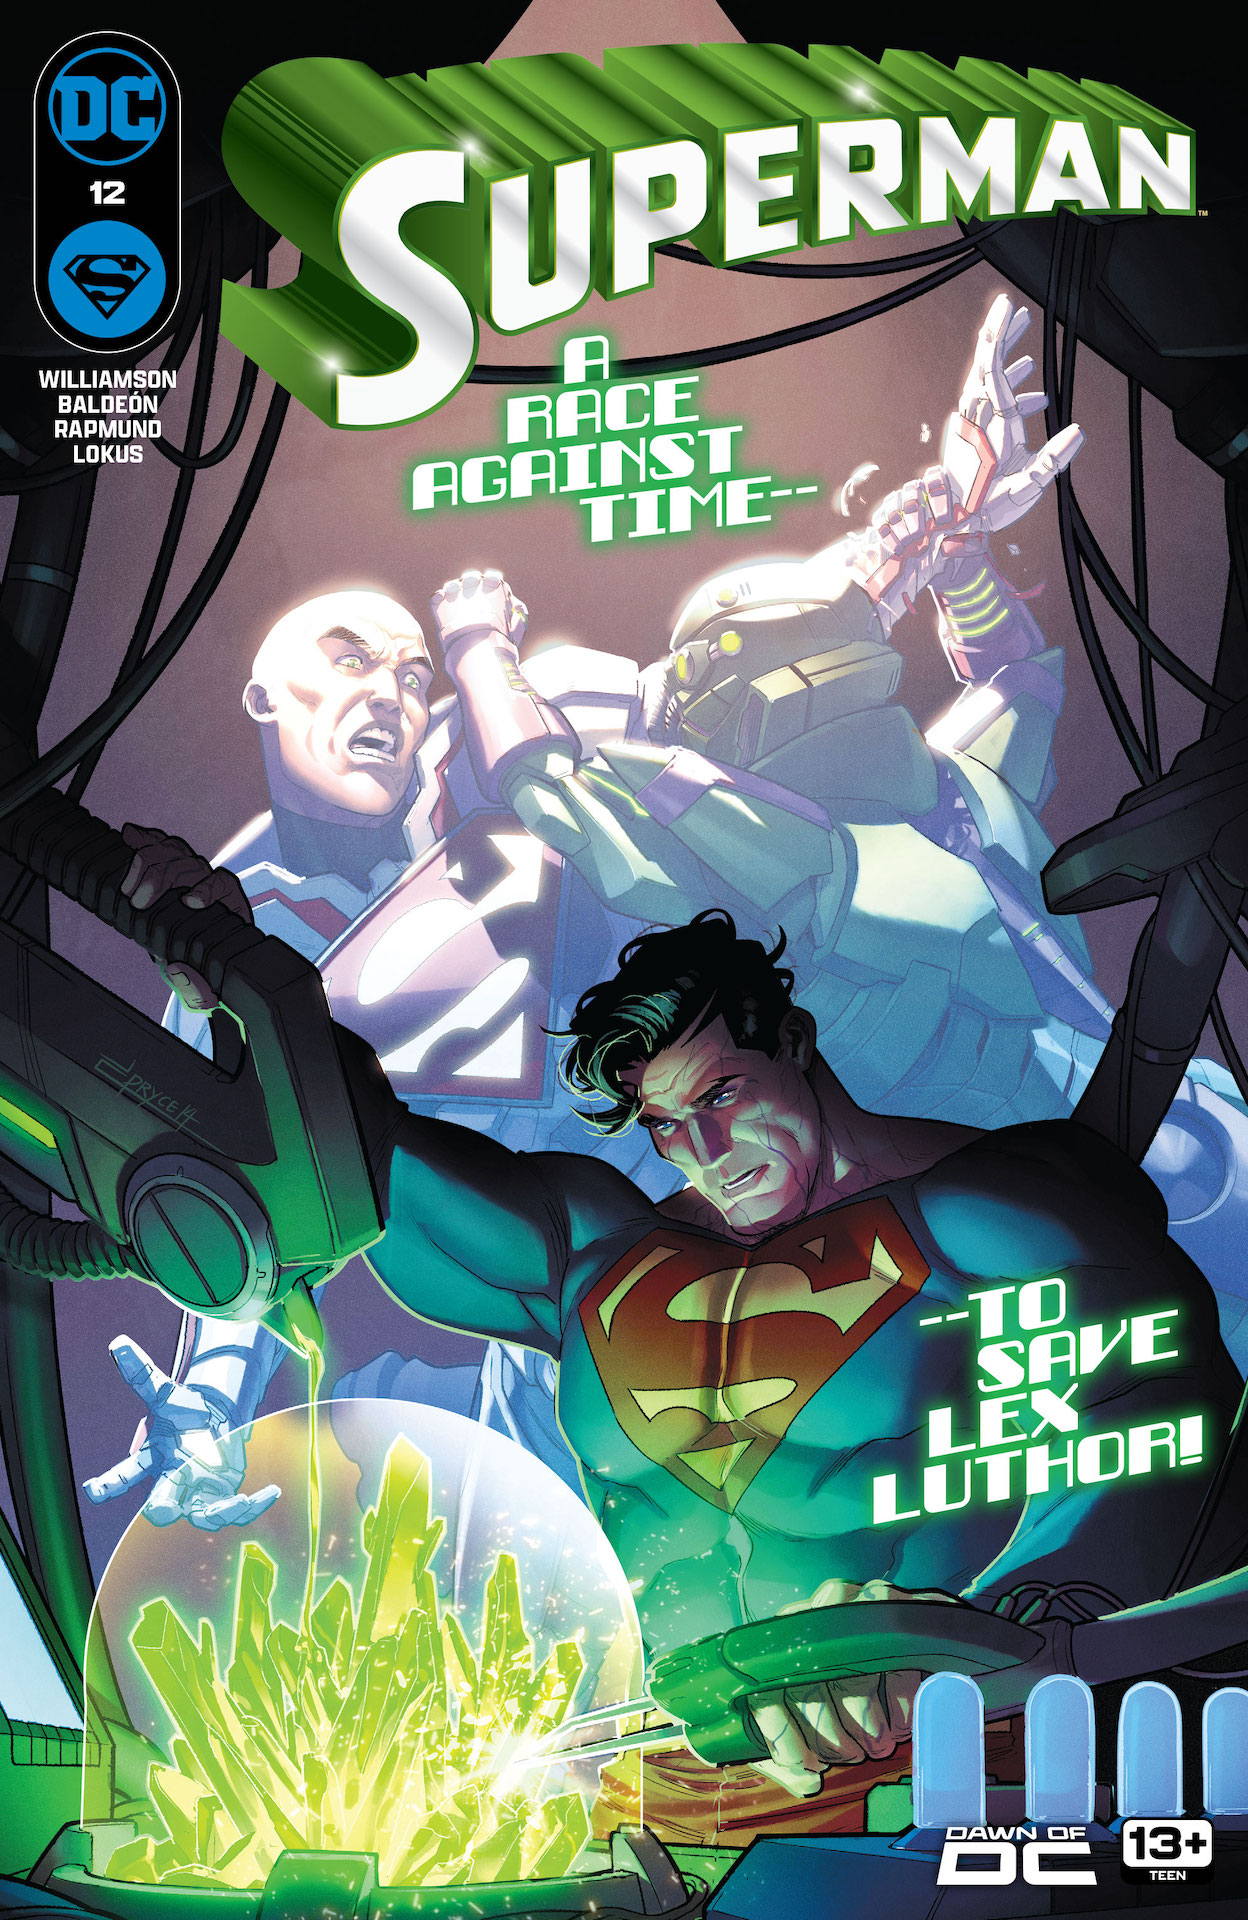 DC Preview: Superman #12